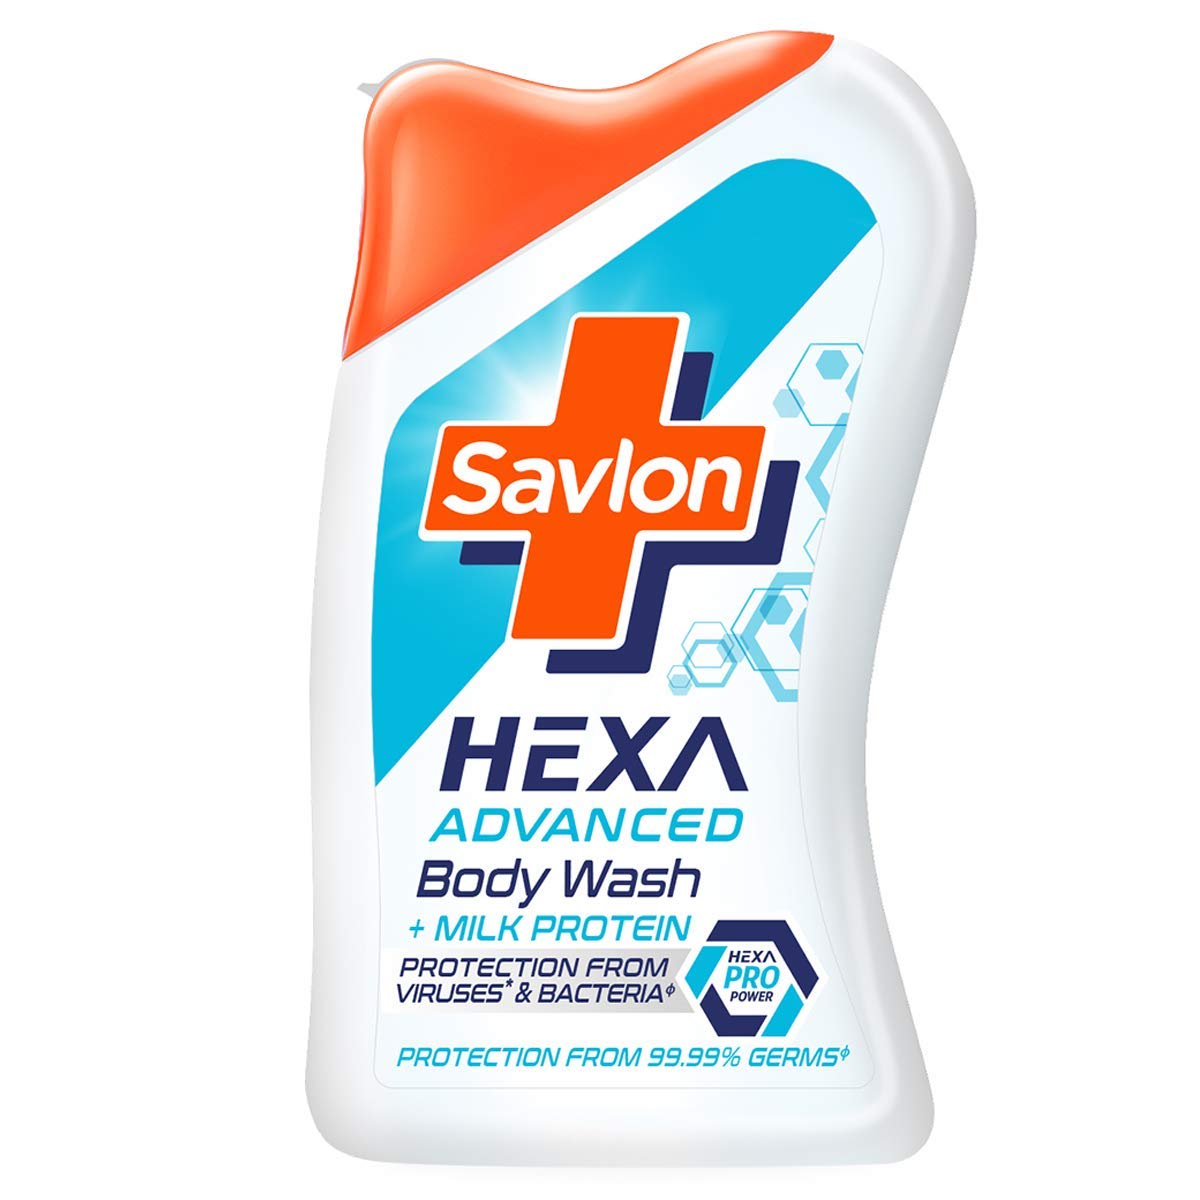 Savlon Hexa Advanced Body Wash with Milk Protein, 215ml